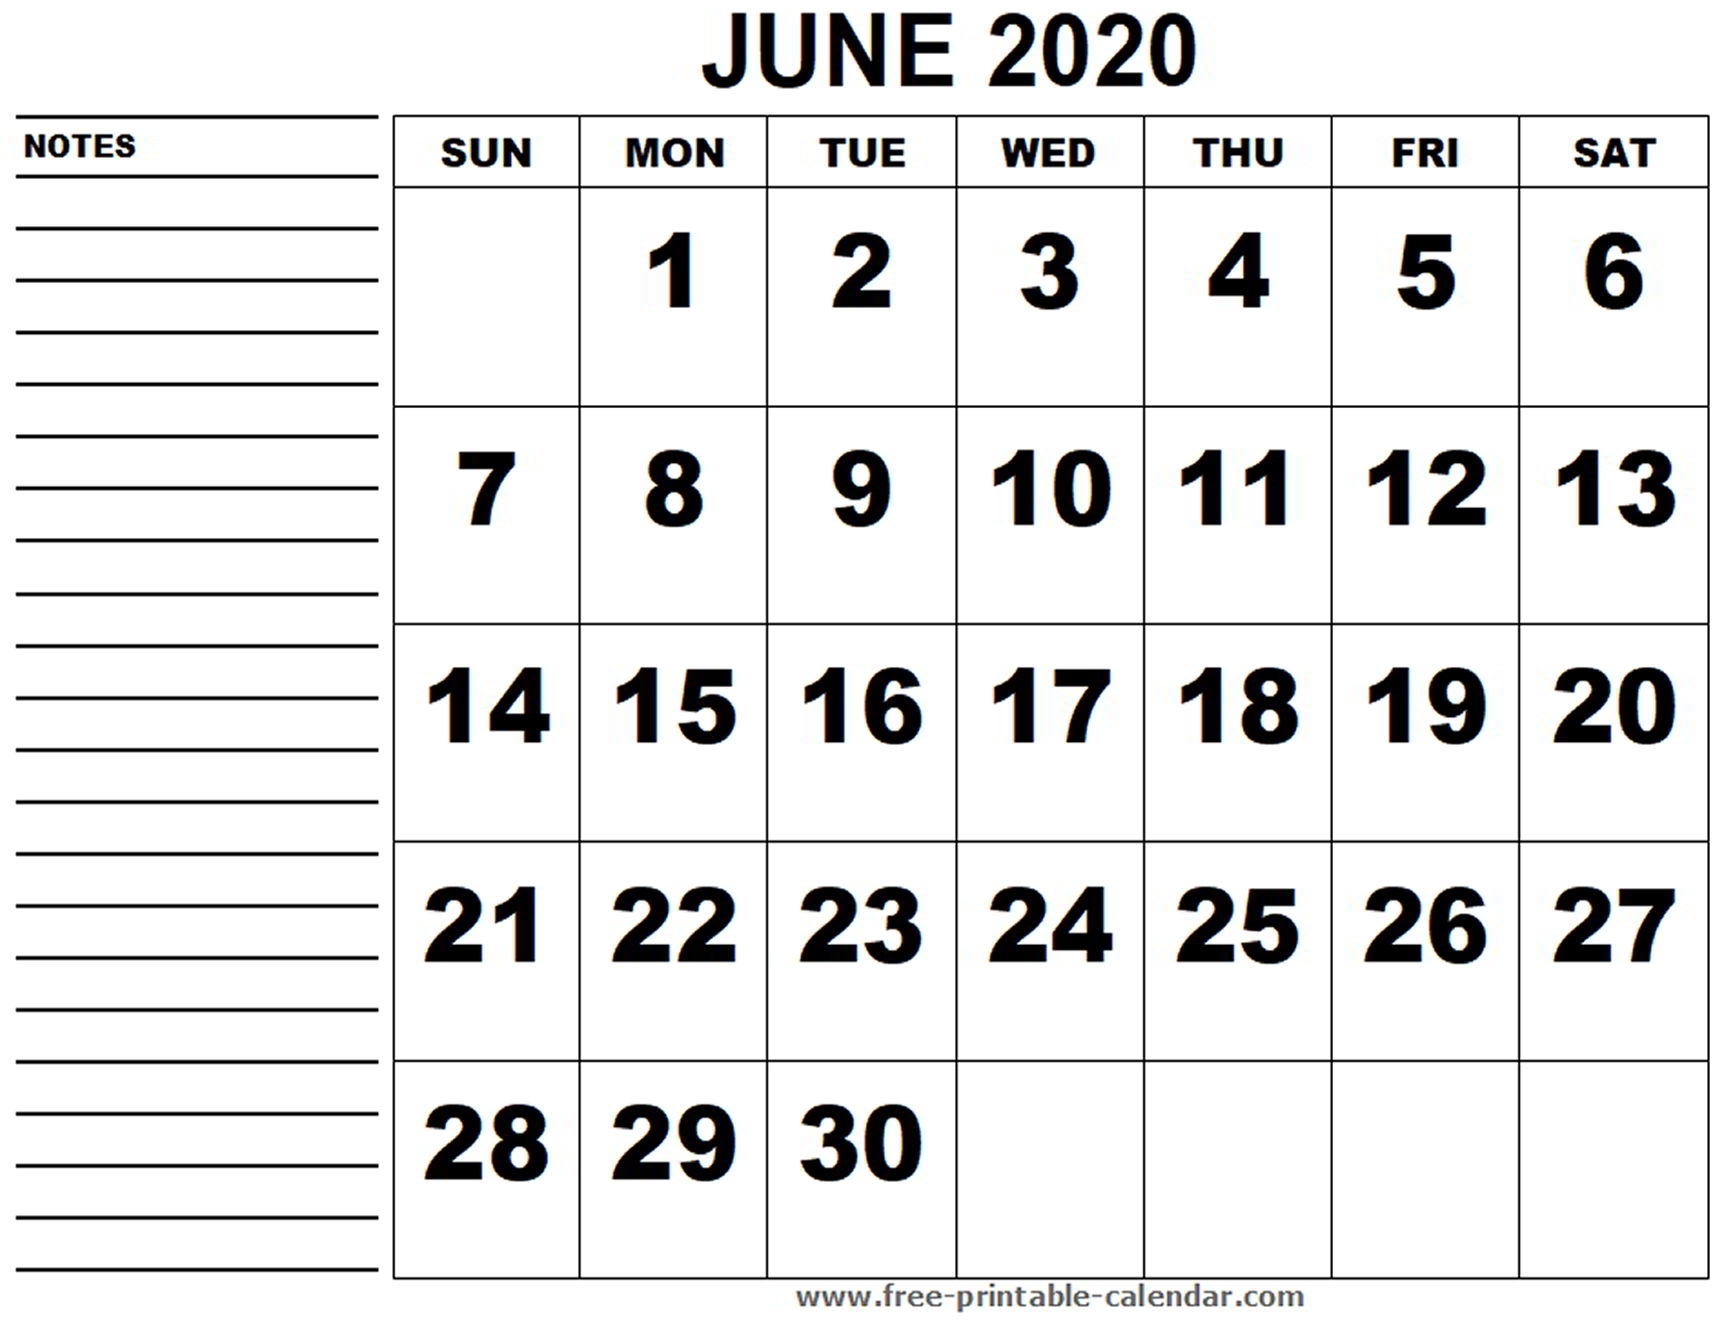 Printable Calendar June 2020 - Free-Printable-Calendar